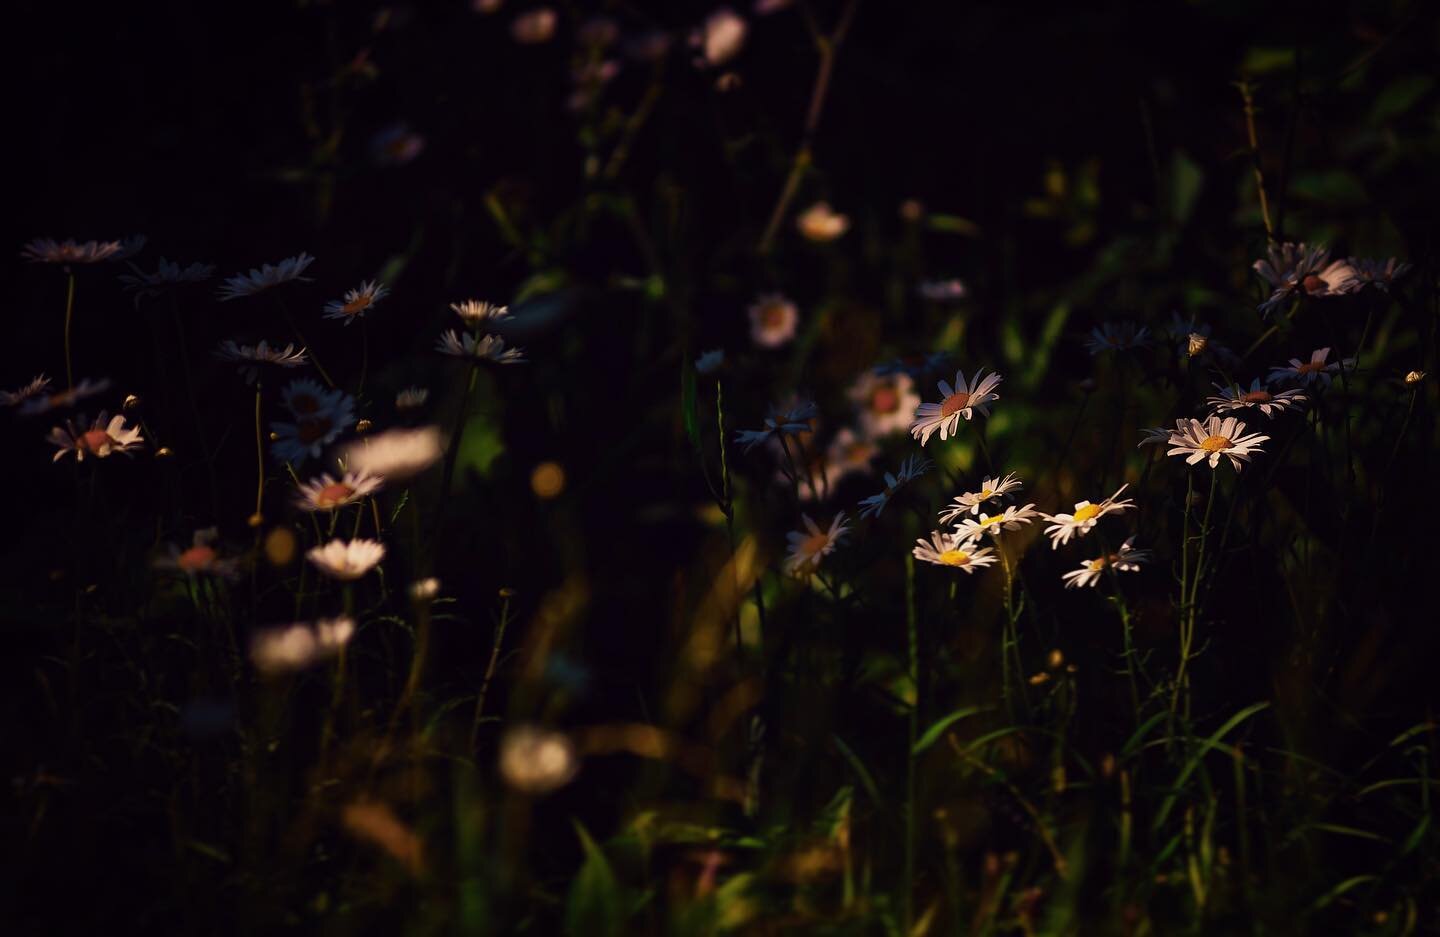 Wildflowers. 
.
.
.
#flowers #daisy #daisies #stopandsmelltheroses #nature #art #artofvisuals #photography #photographer #scenic #avonlake #loraincounty #ohio #stepoutside #optoutside #thegreatoutdoors #outside #lakeerie #wildflowers #bloom #grow #su